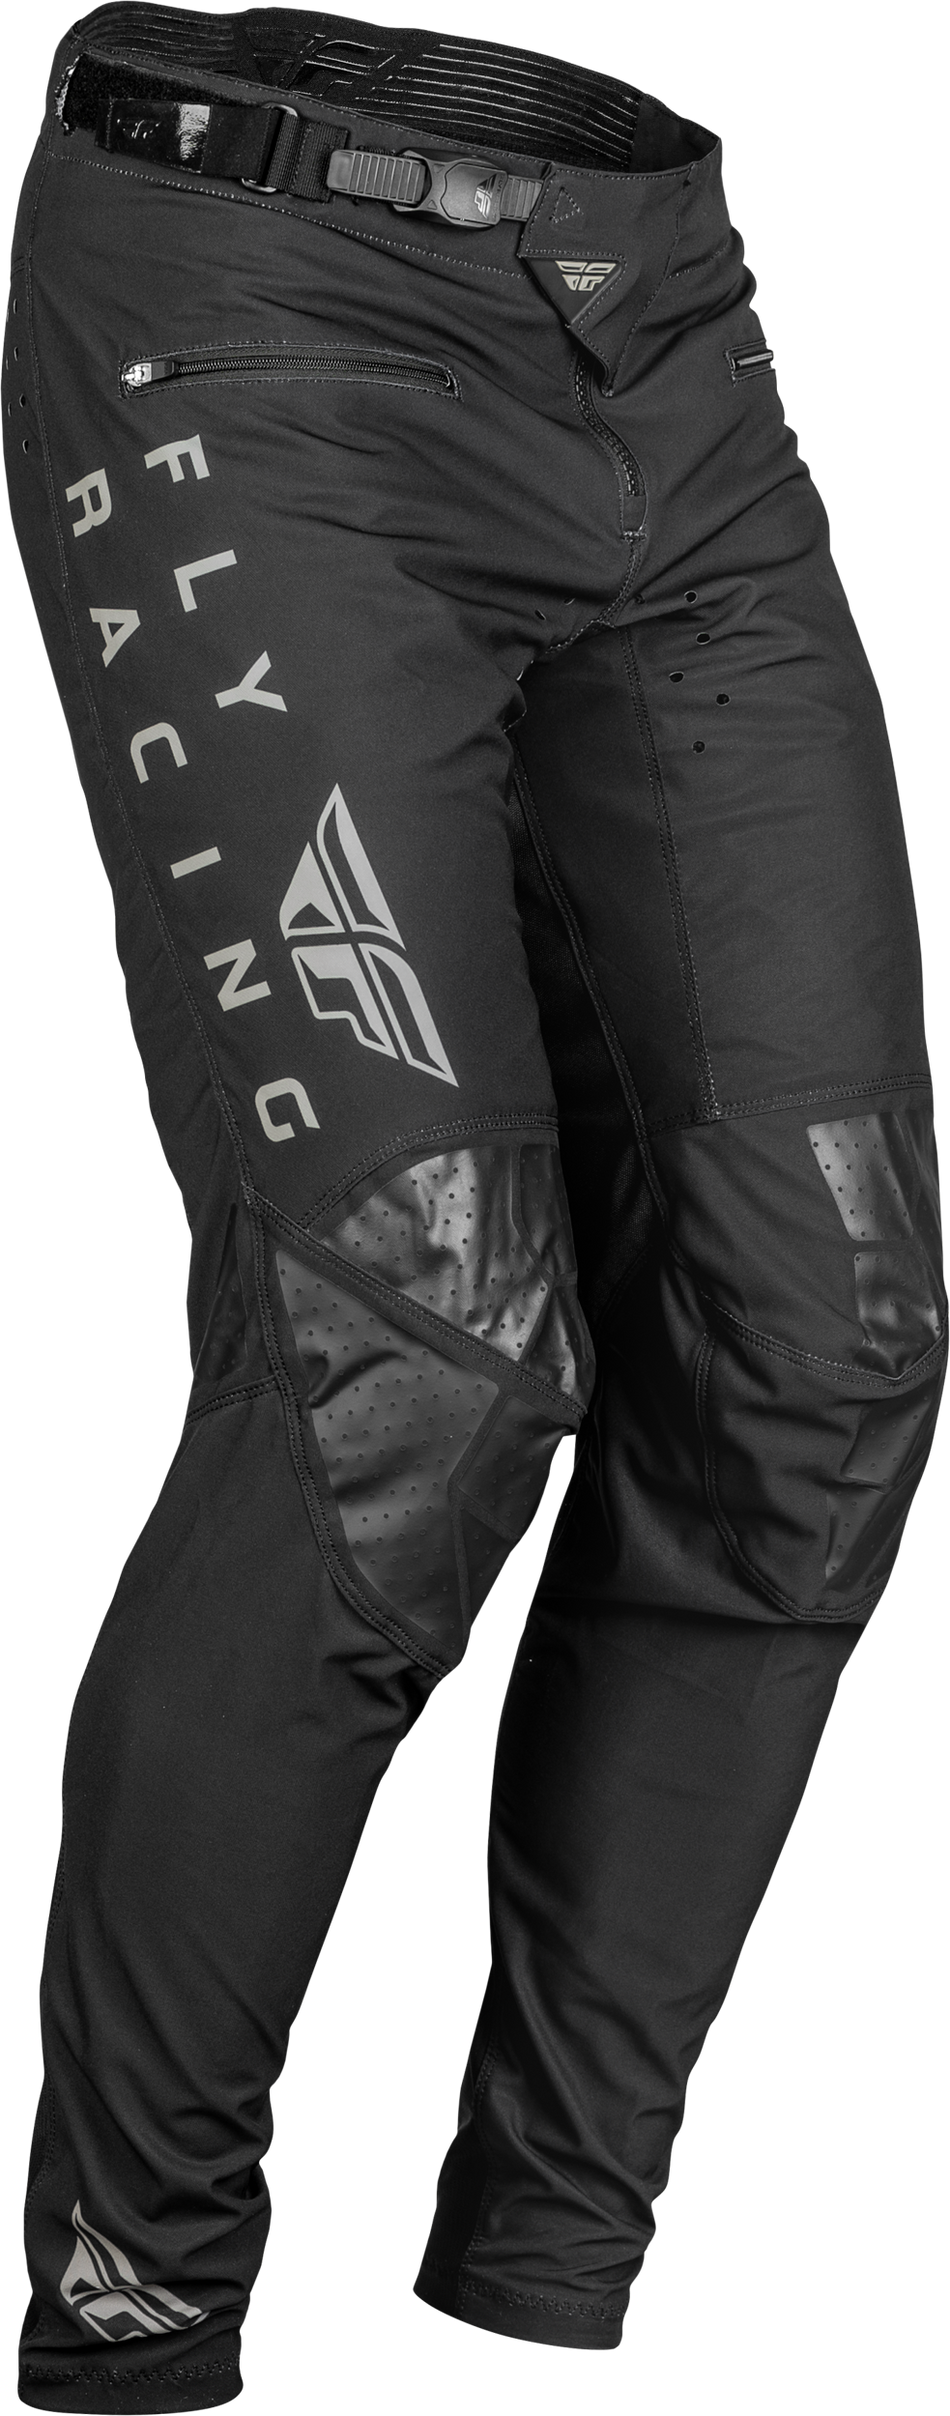 FLY RACING Radium Bicycle Pants Black/Grey Sz 38 376-04038